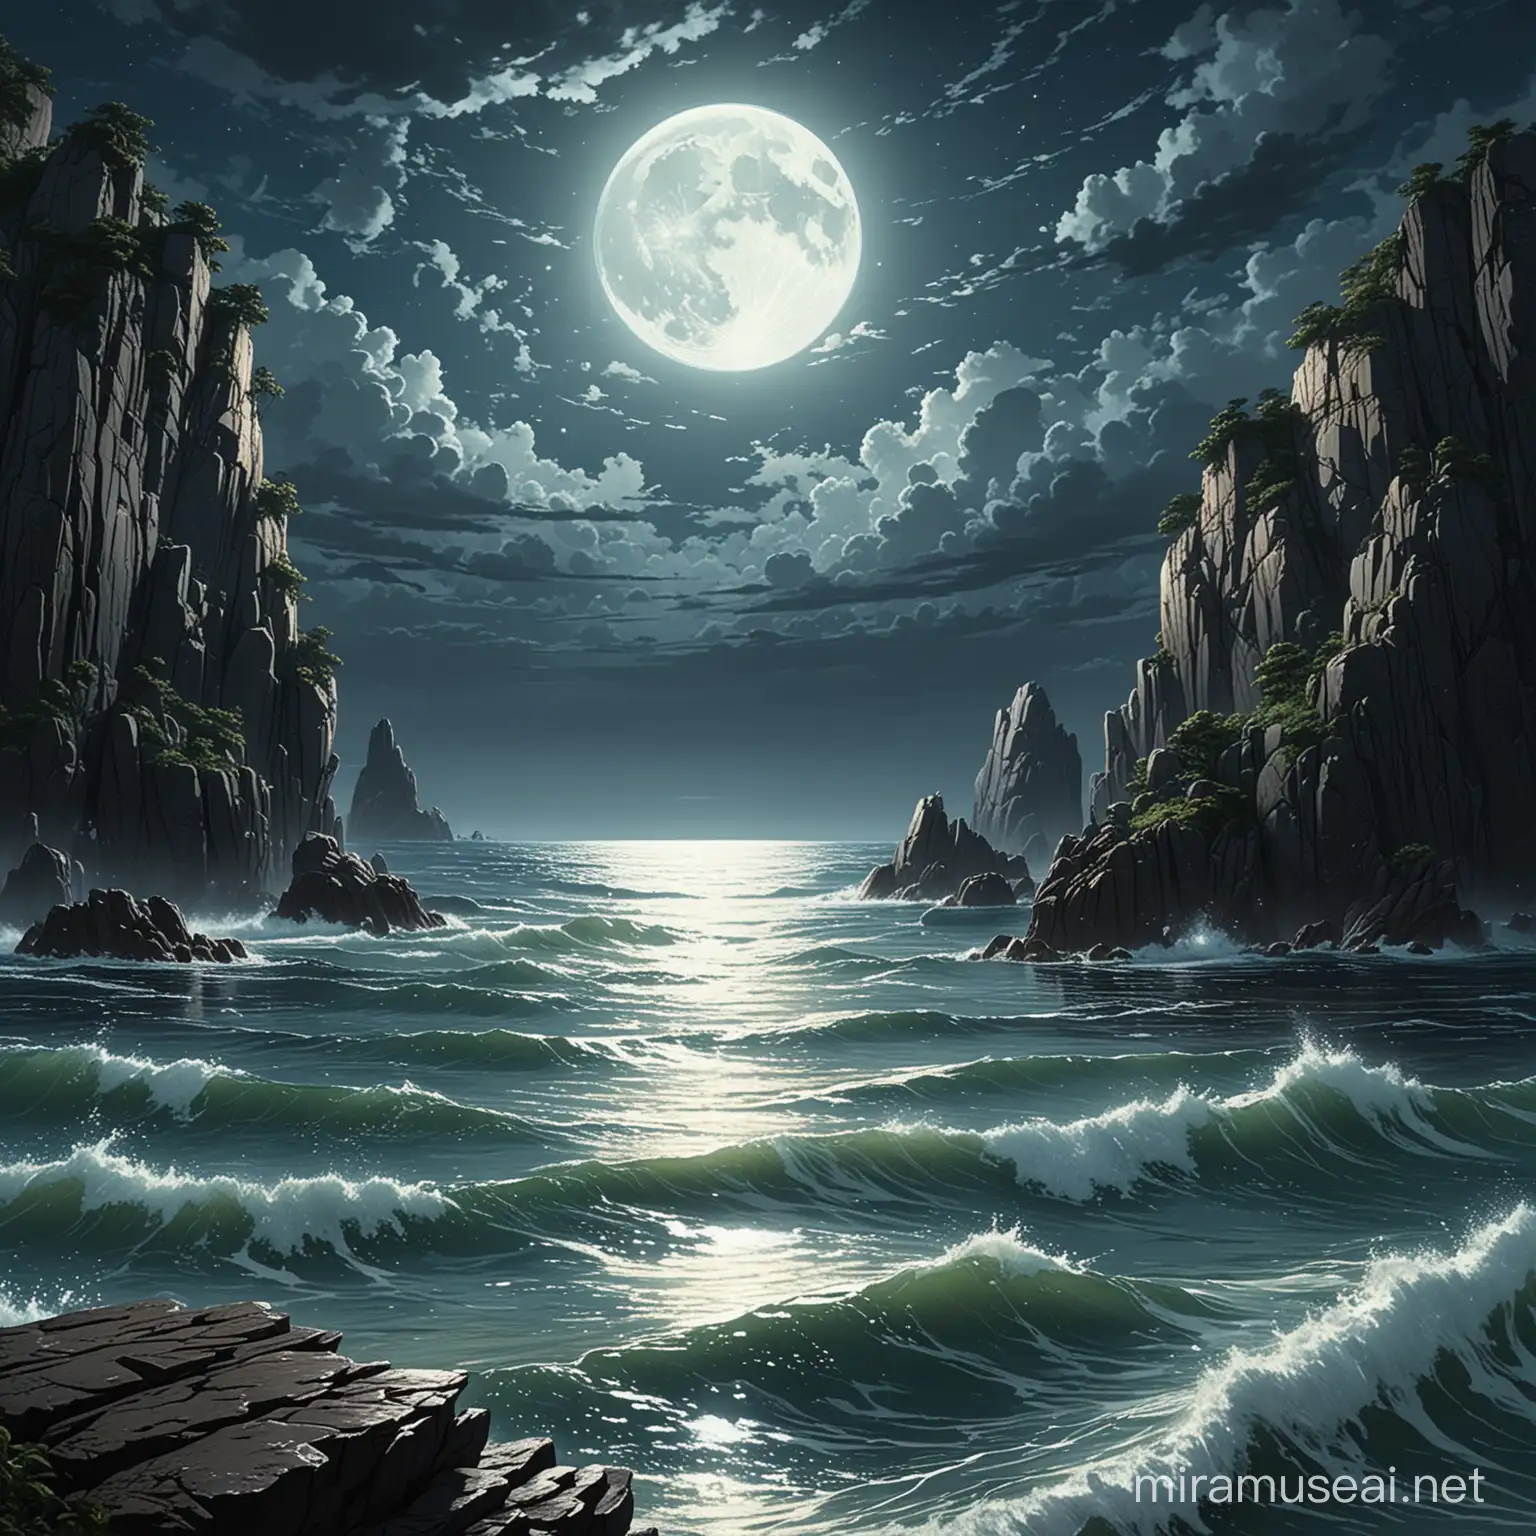 Moonlit Ocean Rock Mystical Illustration in Makoto Shinkai Style